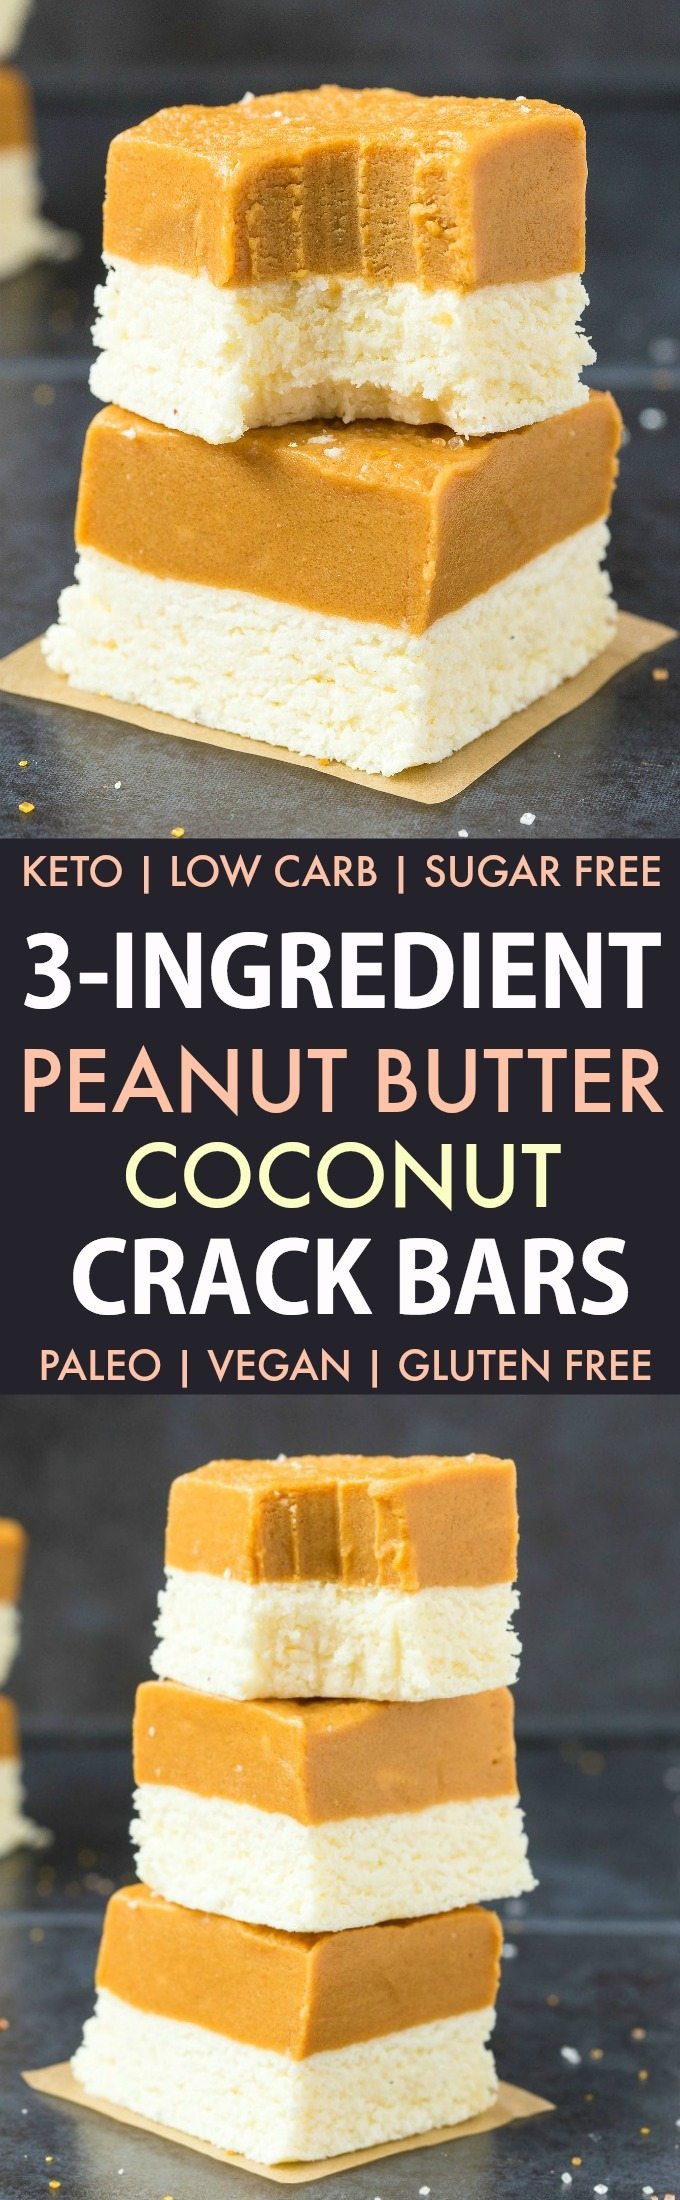 Keto No Bake Cookies Without Coconut
 3 Ingre nt Paleo Vegan Peanut Butter Coconut Crack Bars